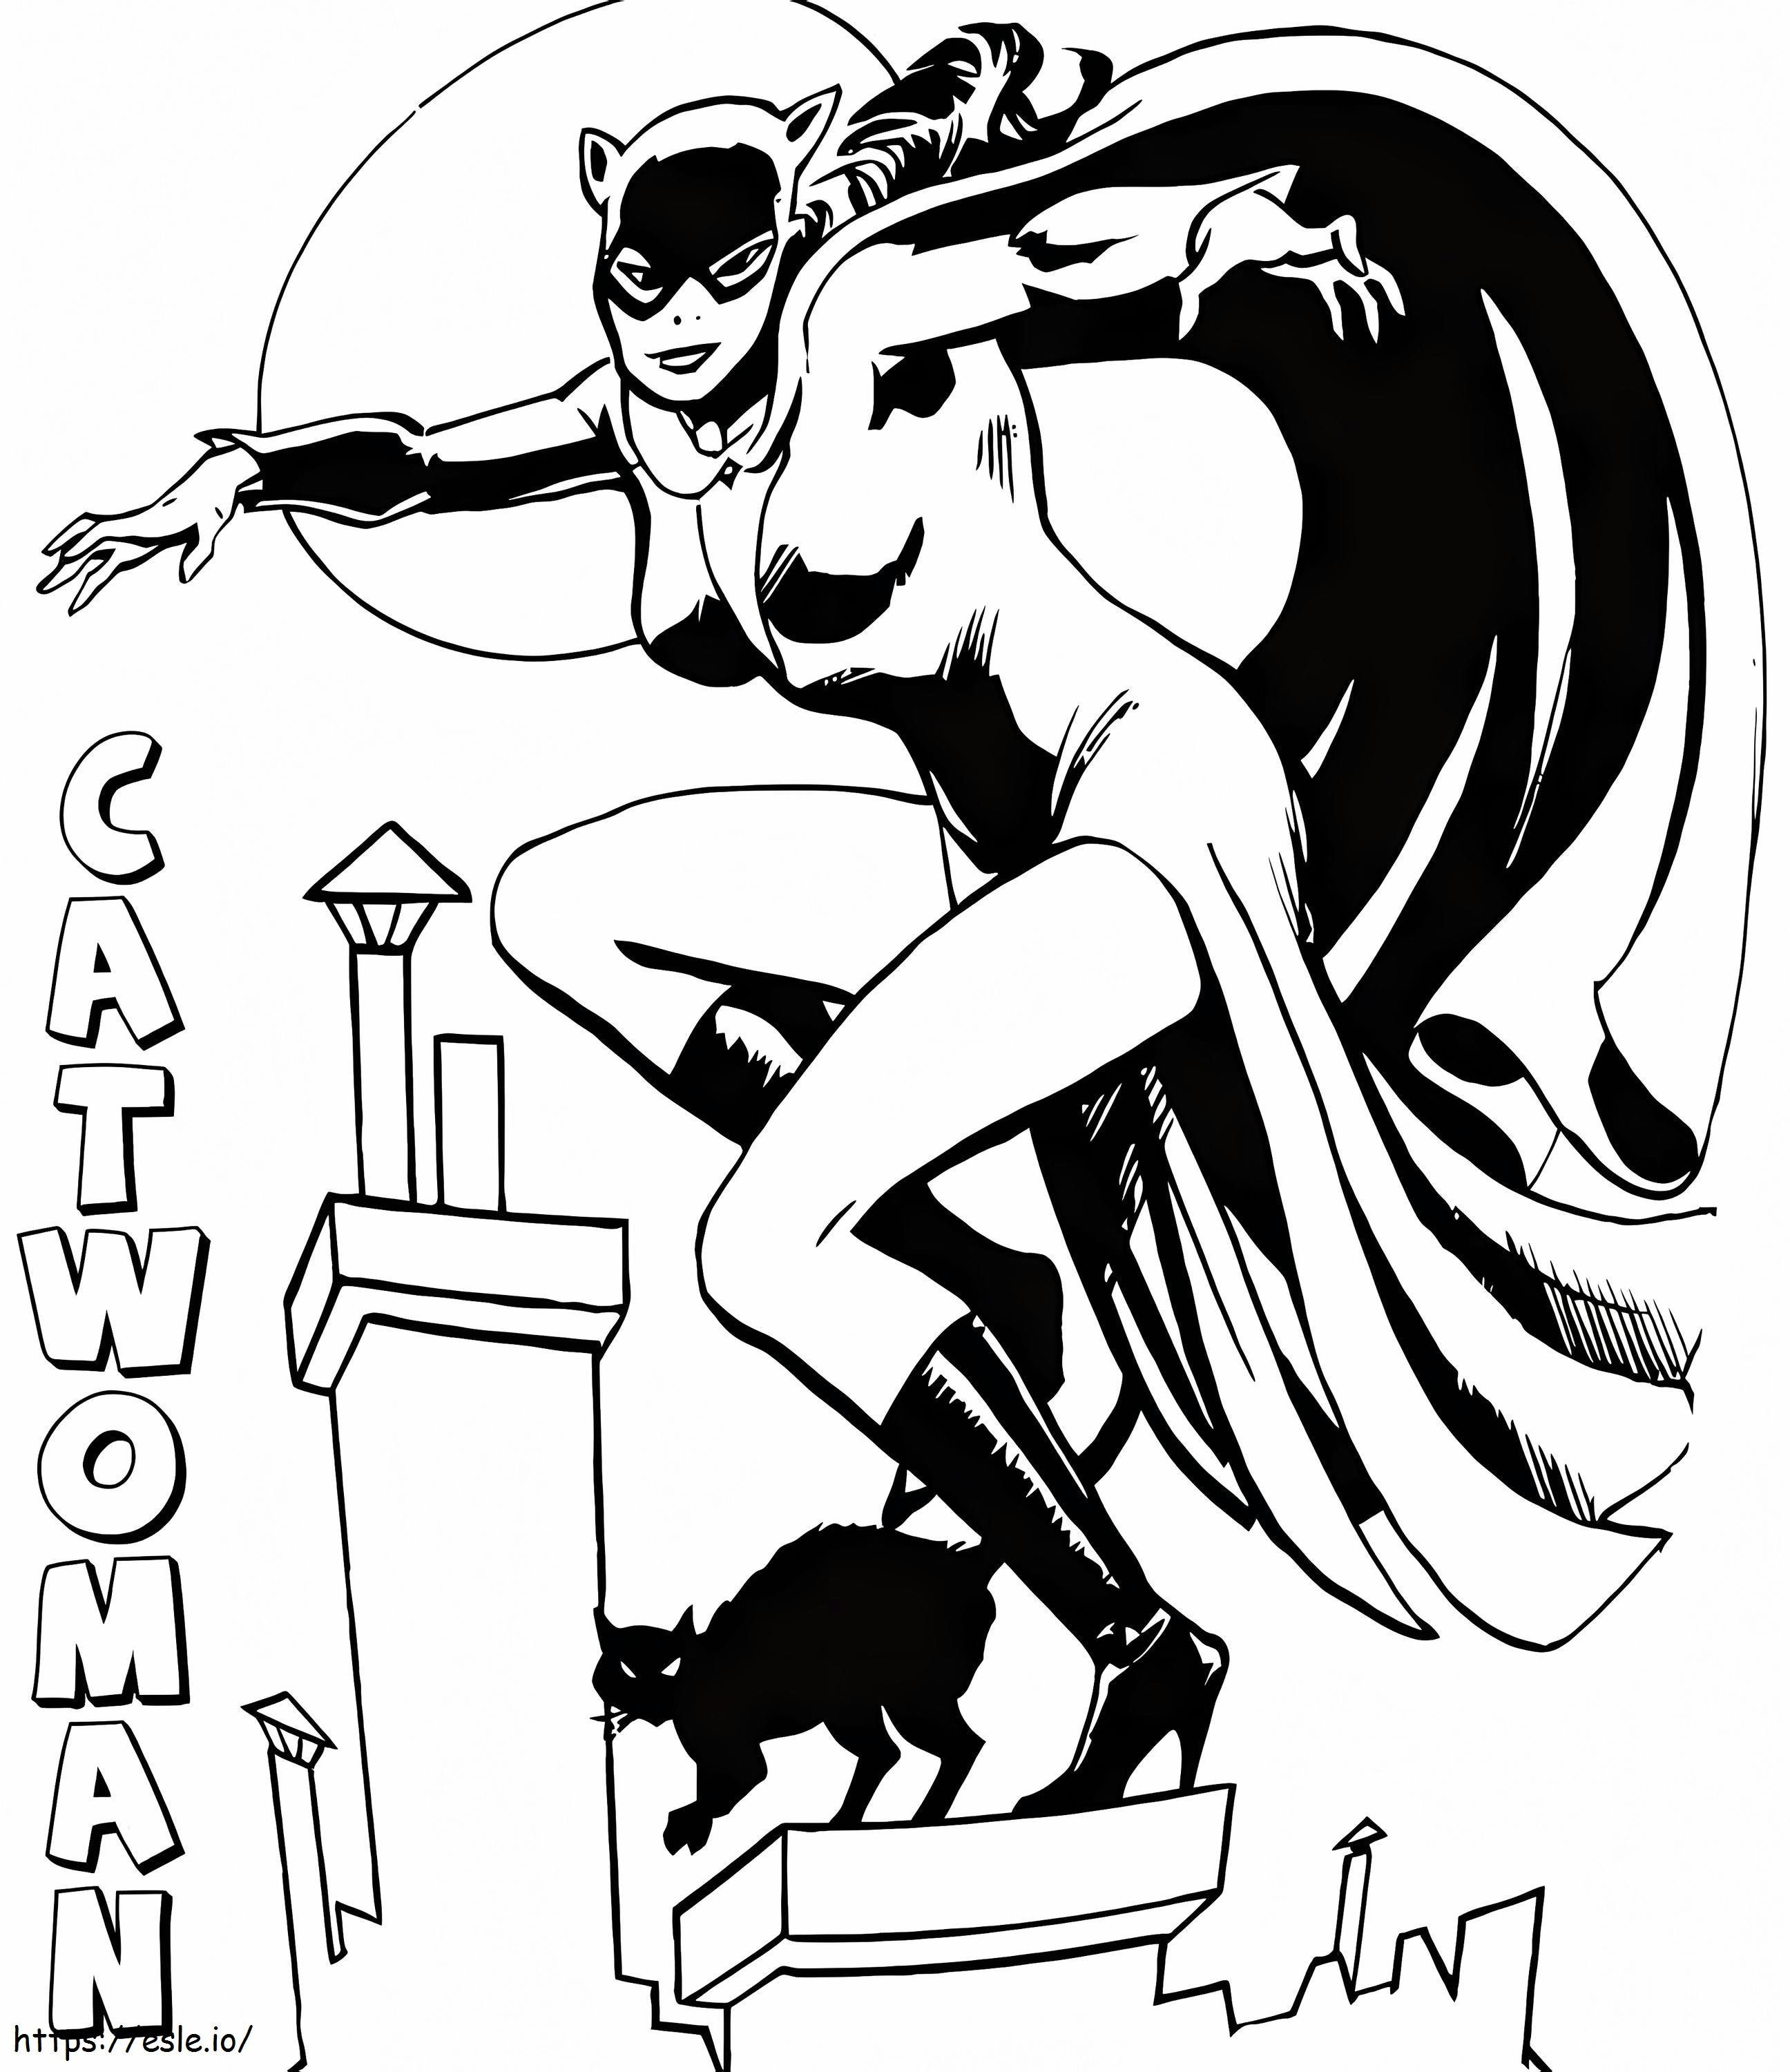 Catwoman I Kot kolorowanka